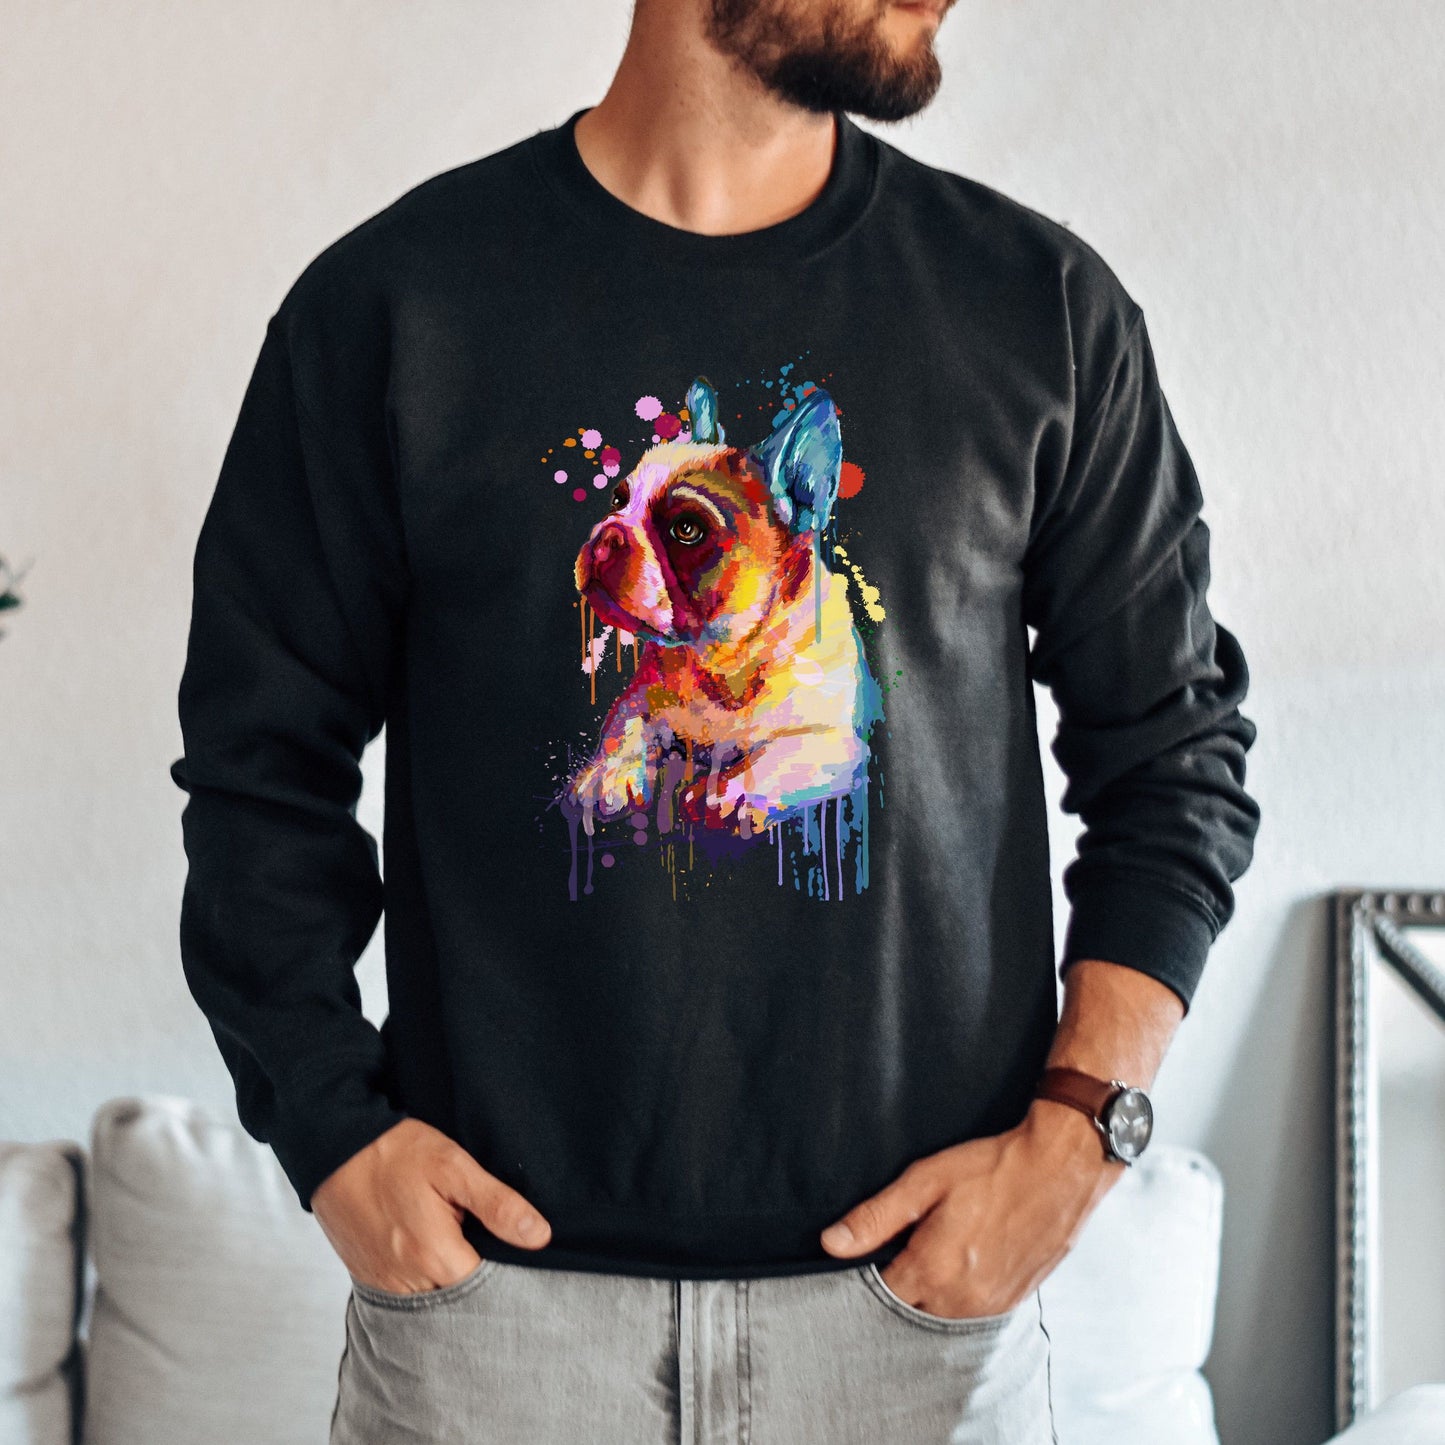 Abstract French bulldog dog Unisex Crewneck Sweatshirt with expressive splashes-Family-Gift-Planet